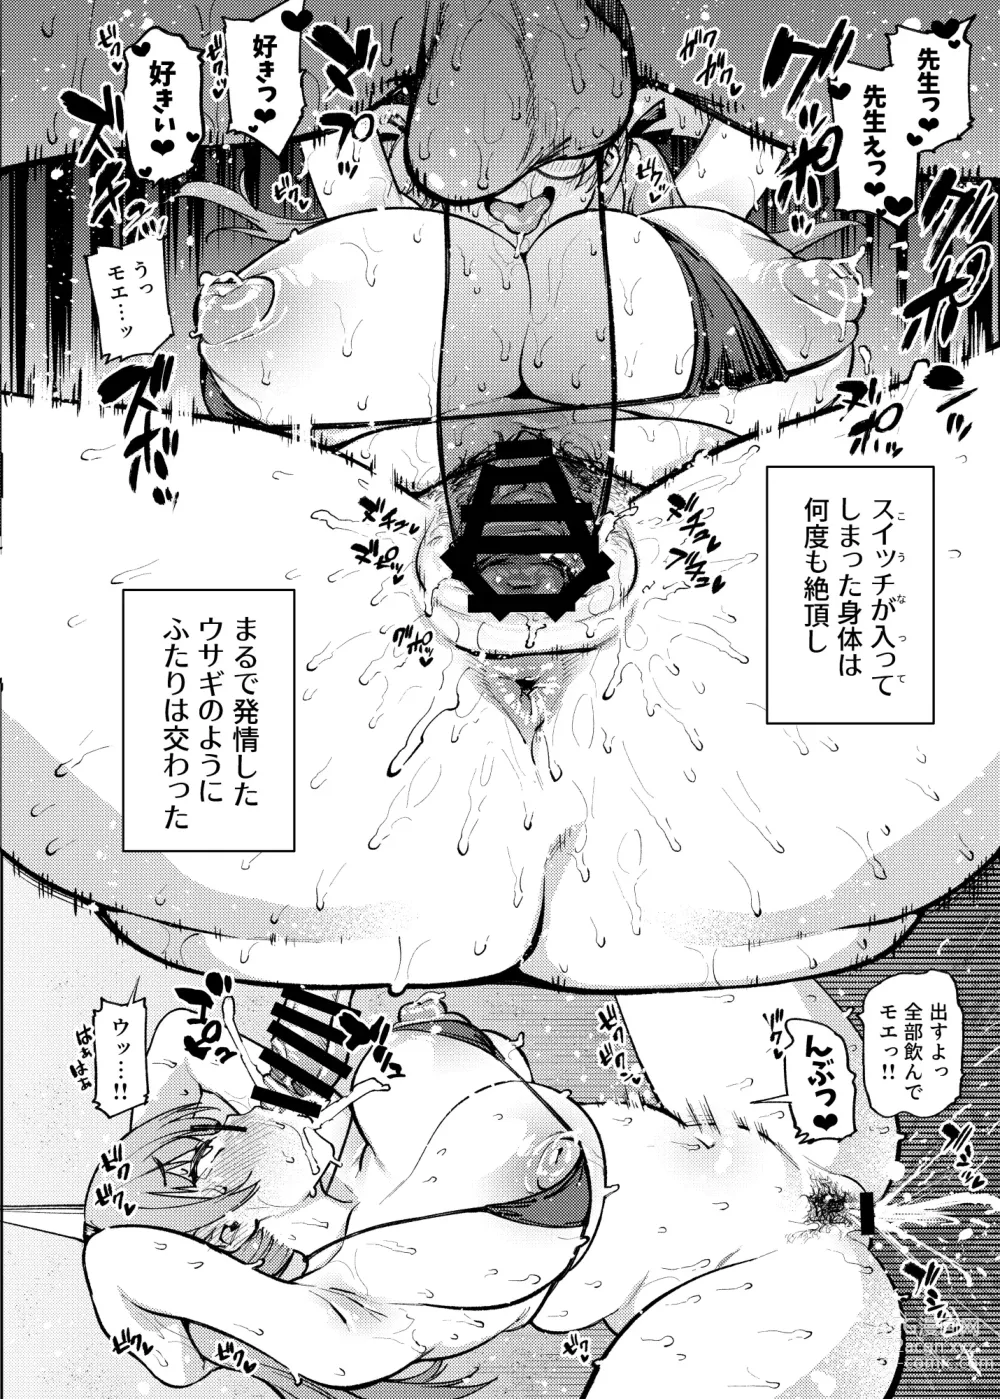 Page 81 of doujinshi Moe to issho ni daietto!!